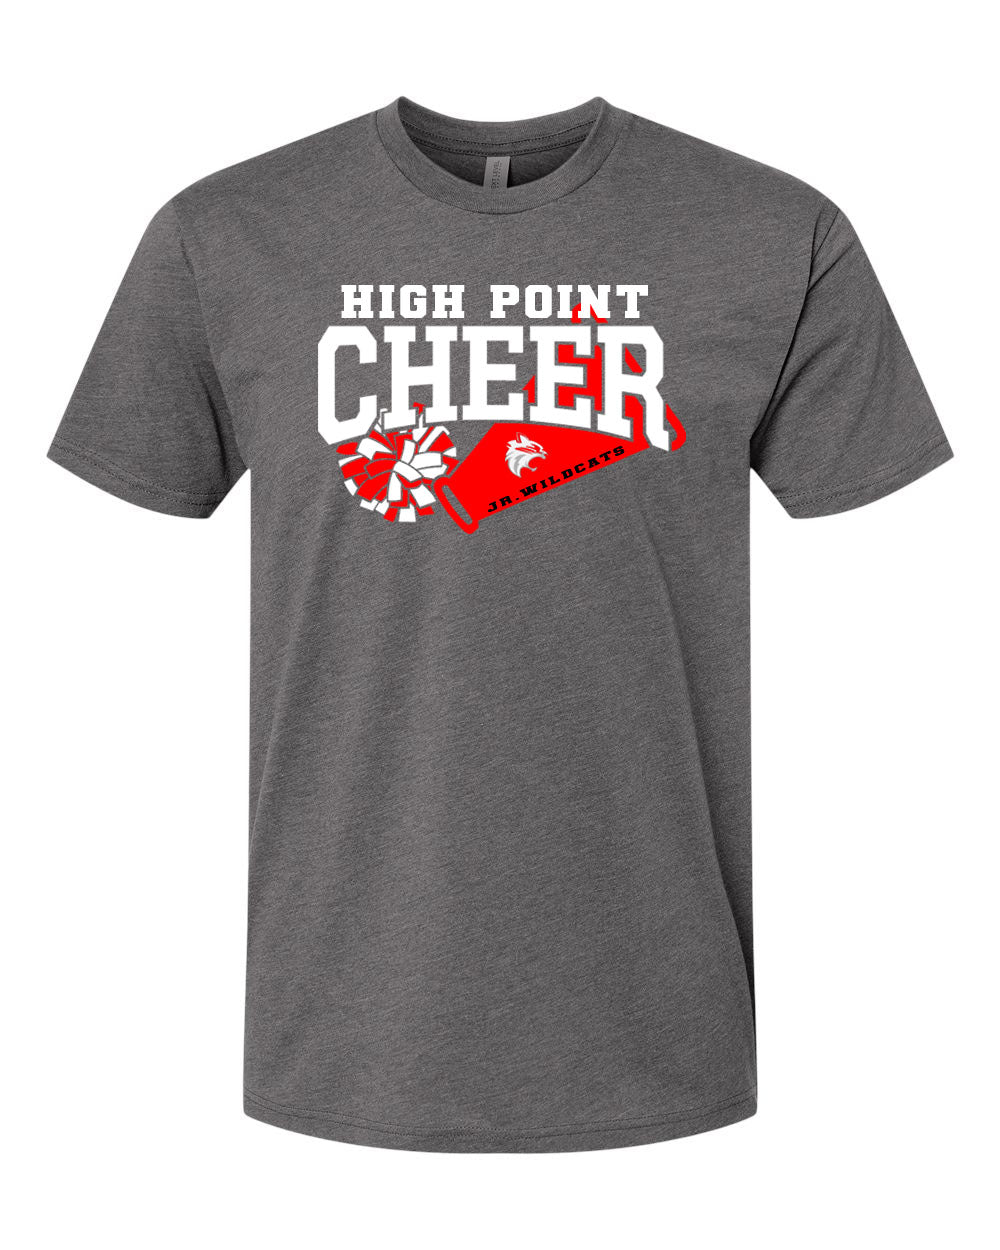 High Point Cheer design 1 T-Shirt